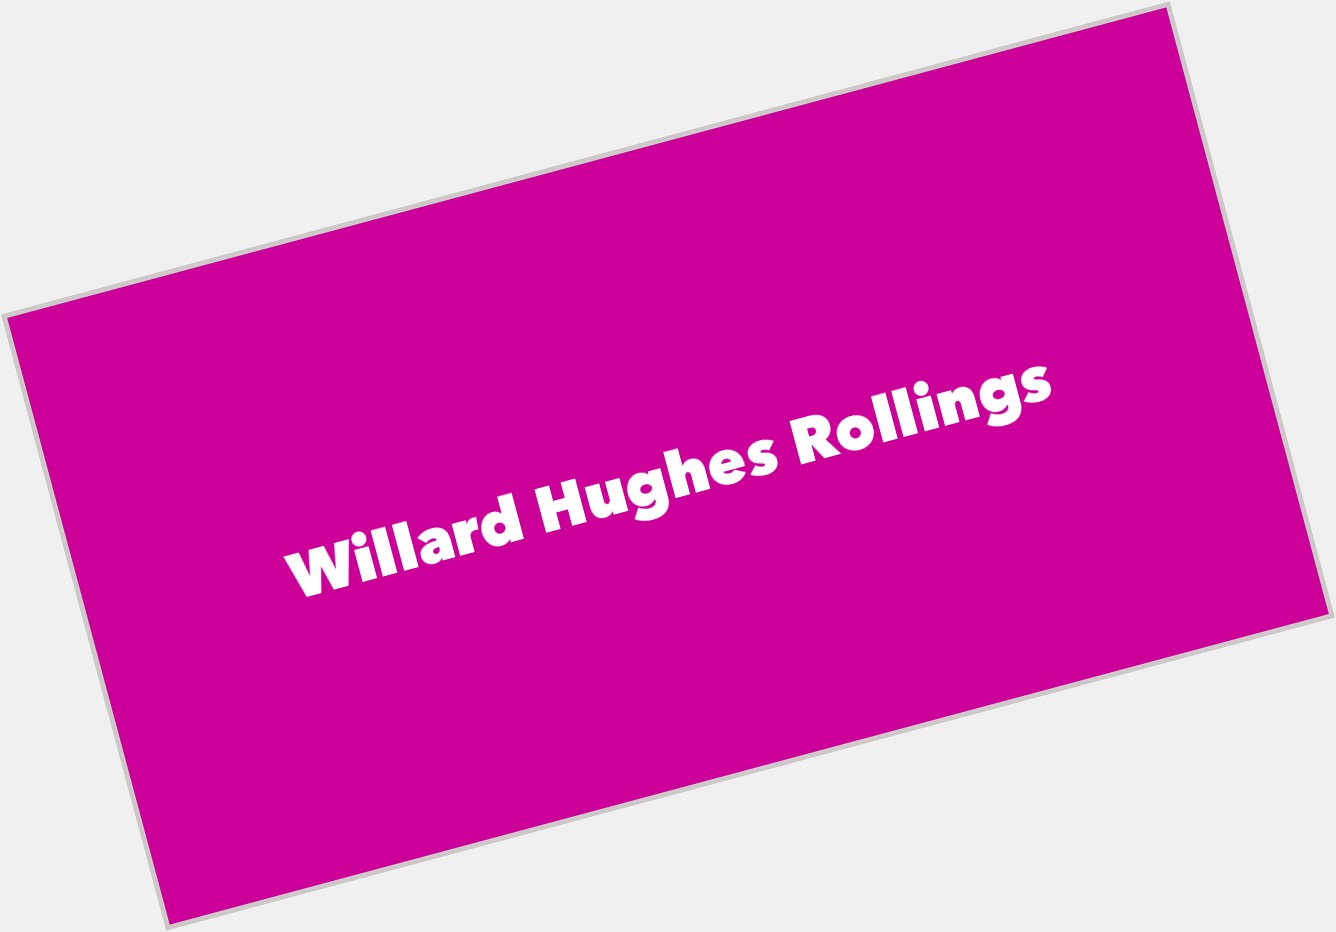 Willard Hughes Rollings new pic 1